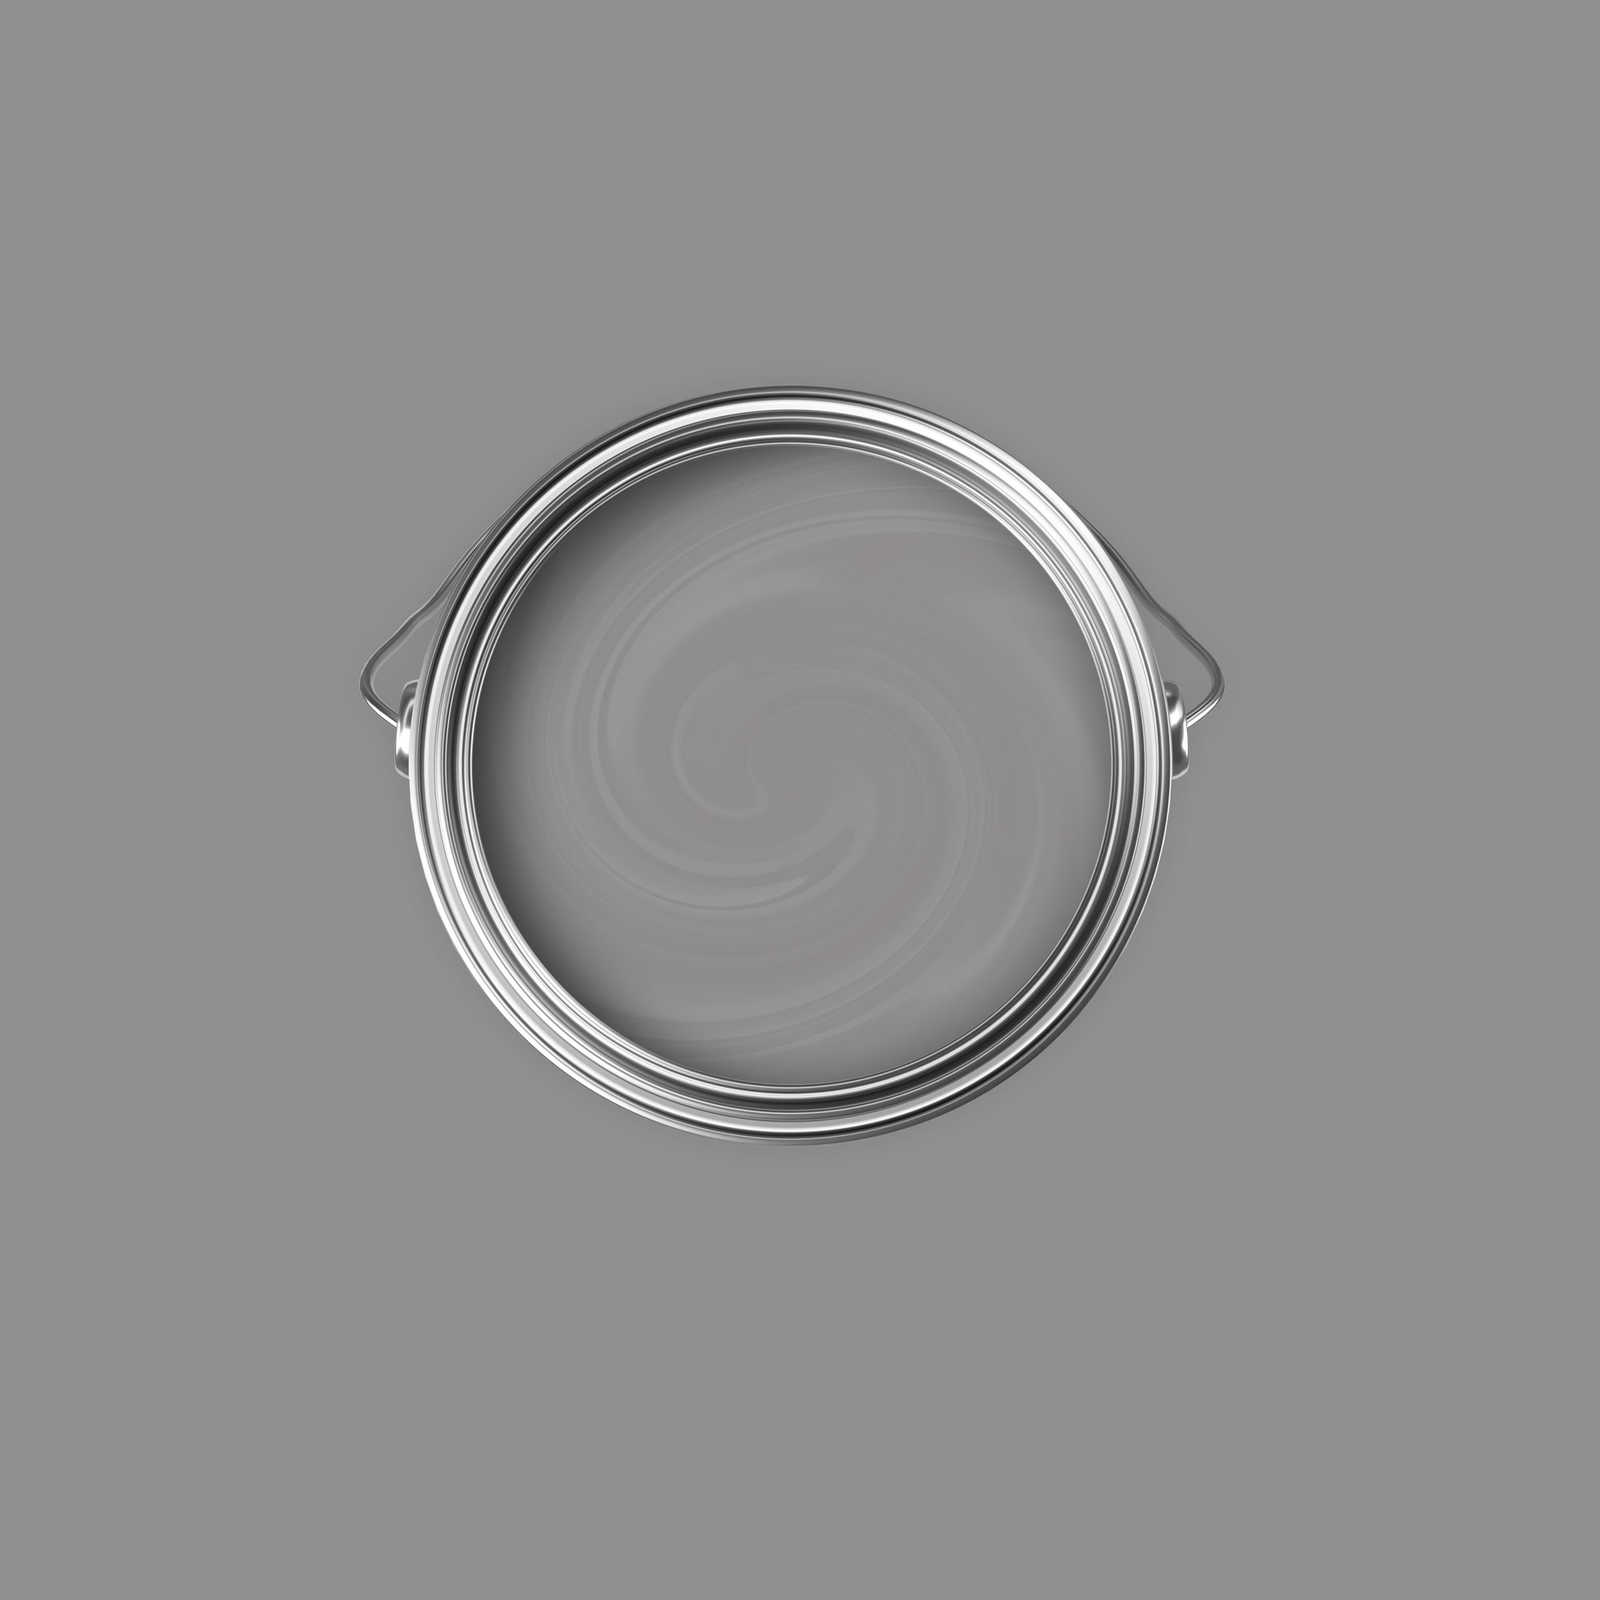             Premium Wandfarbe überzeugendes Steingrau »Industrial Grey« NW103 – 2,5 Liter
        